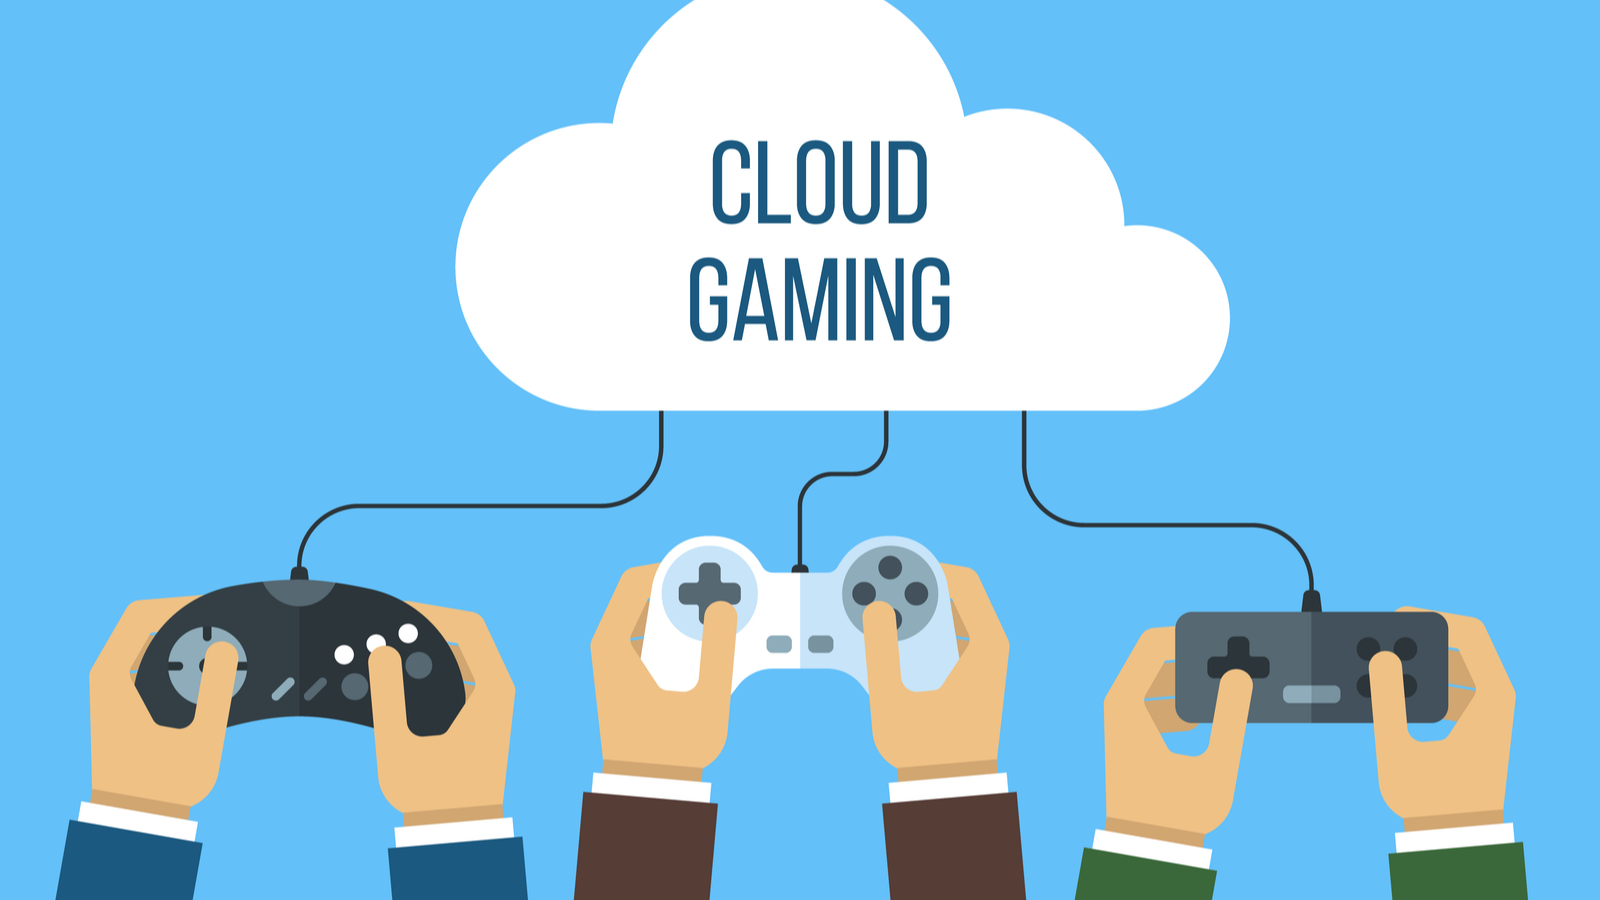 rend disponible le service de cloud gaming Luna en France